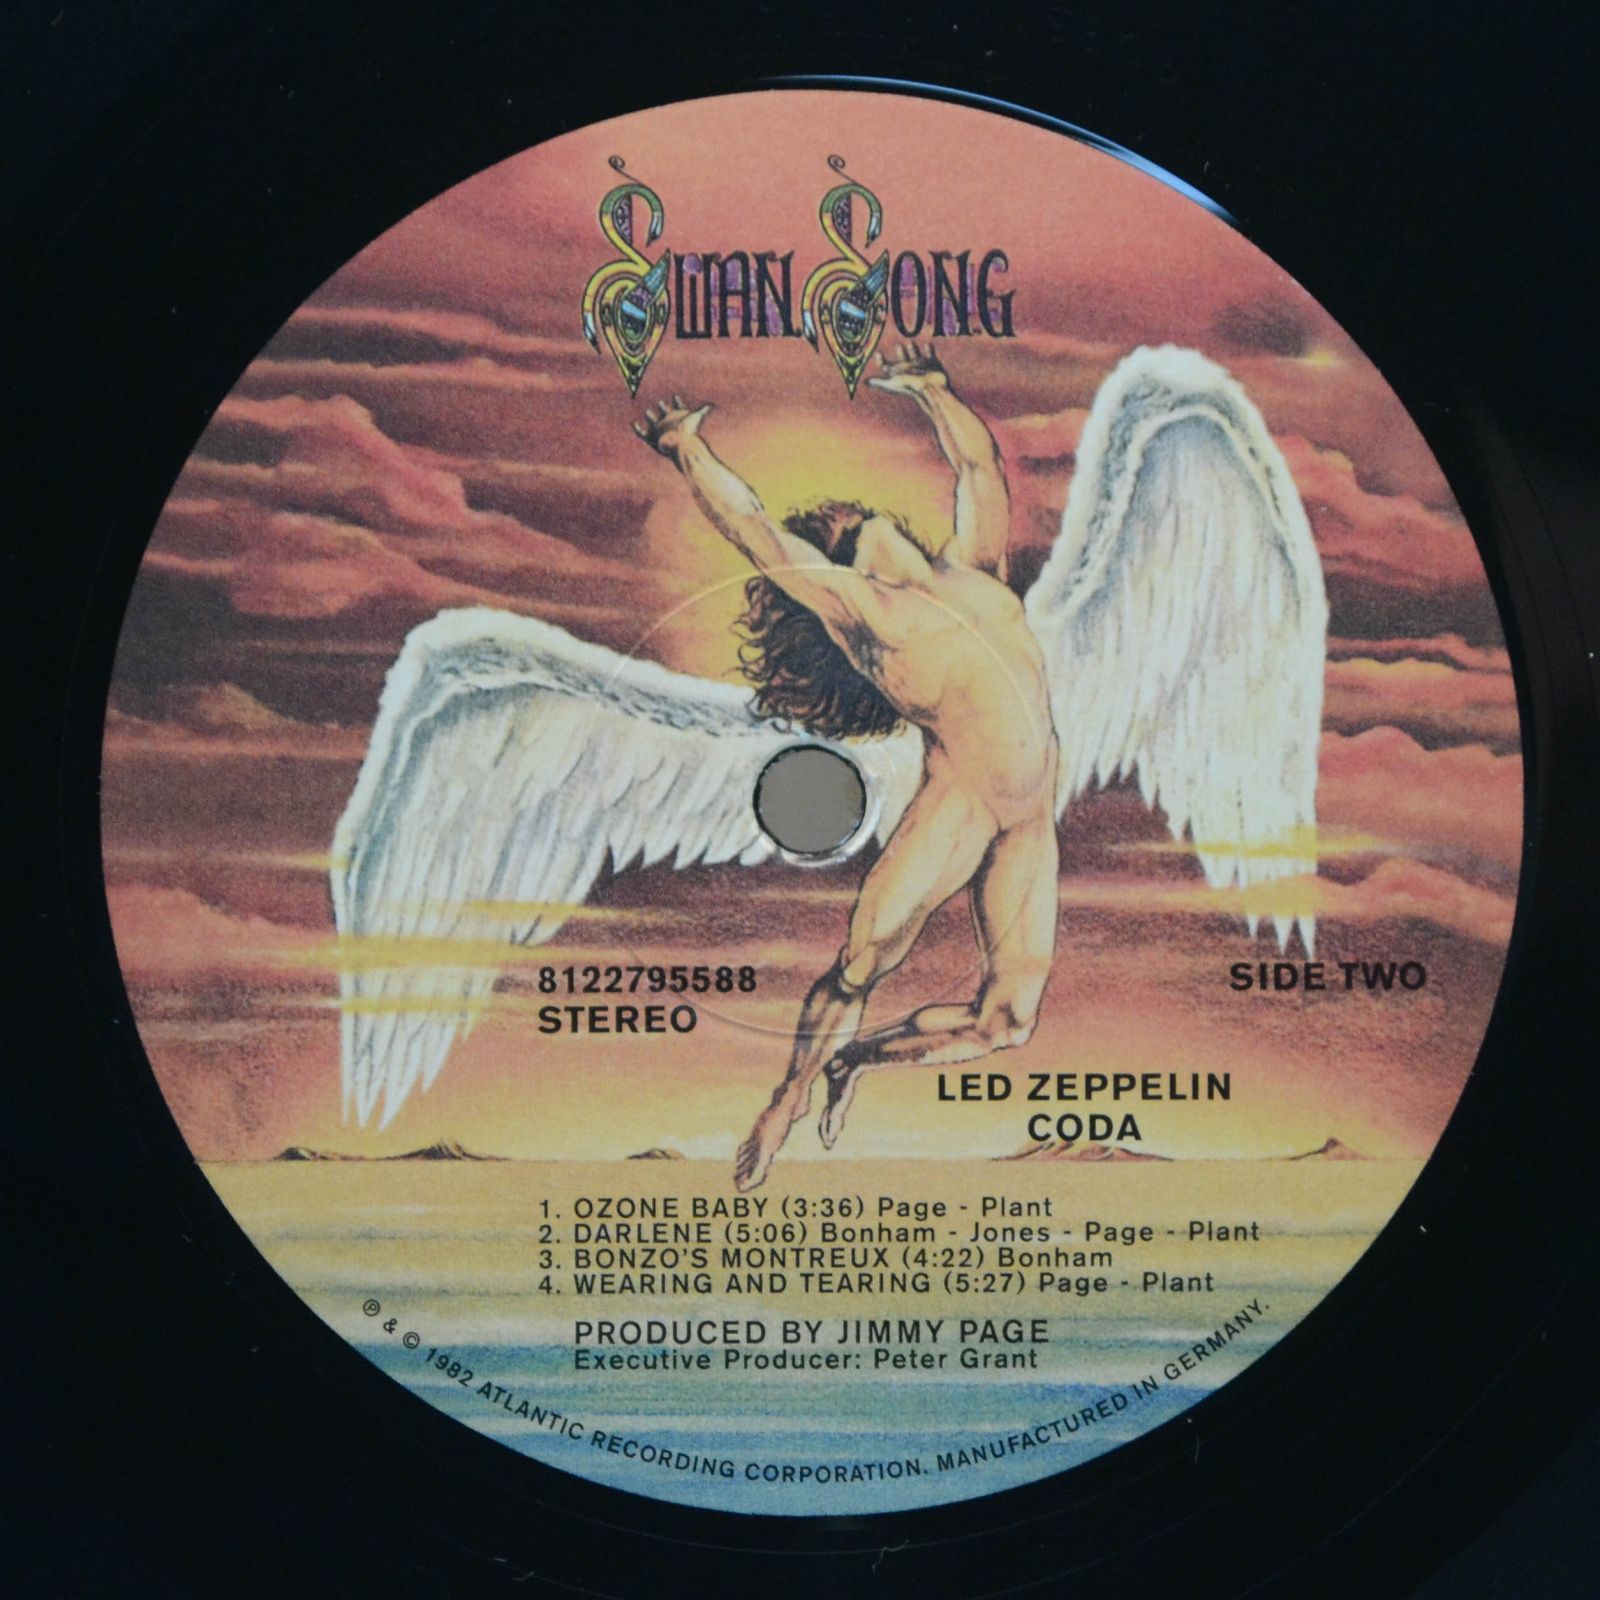 Led Zeppelin — Coda, 1982